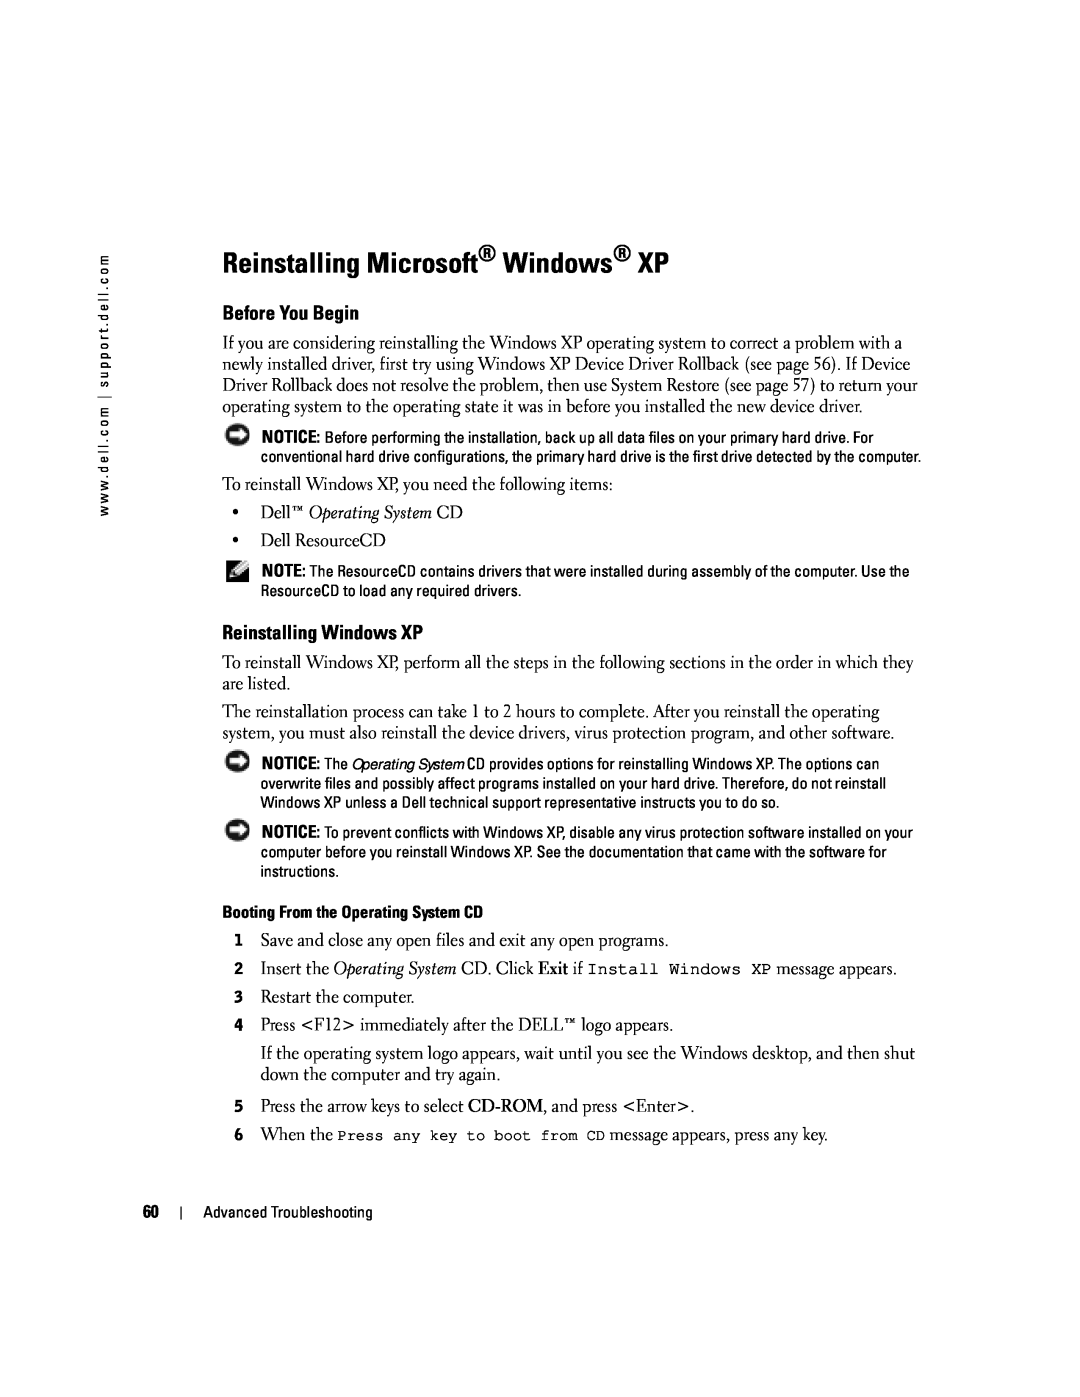 Dell XPS manual Reinstalling Microsoft Windows XP, Before You Begin, Reinstalling Windows XP 